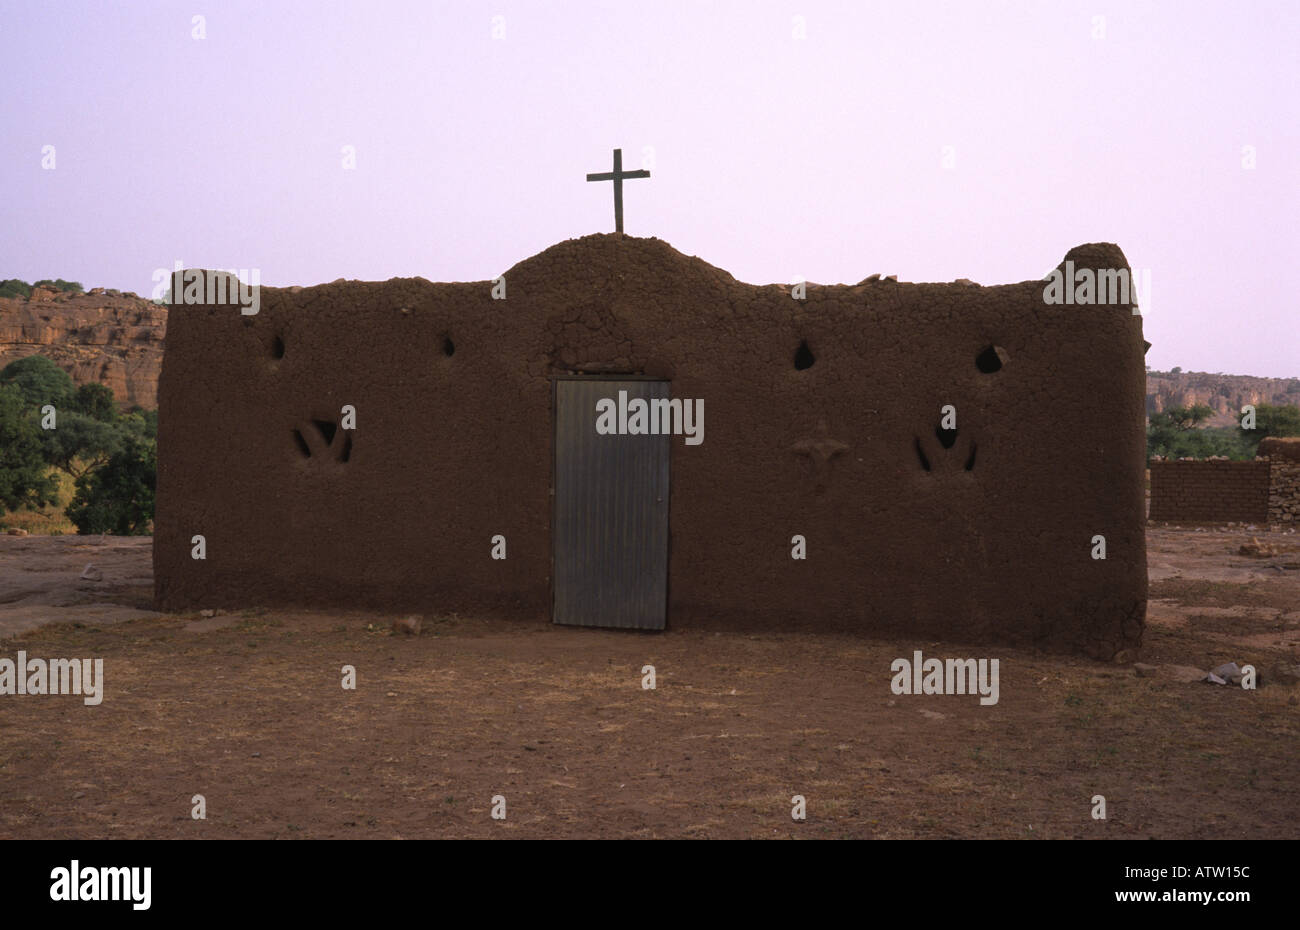 Iglesia cristiana construida de barro el país Dogon de Malí África Occidental Foto de stock